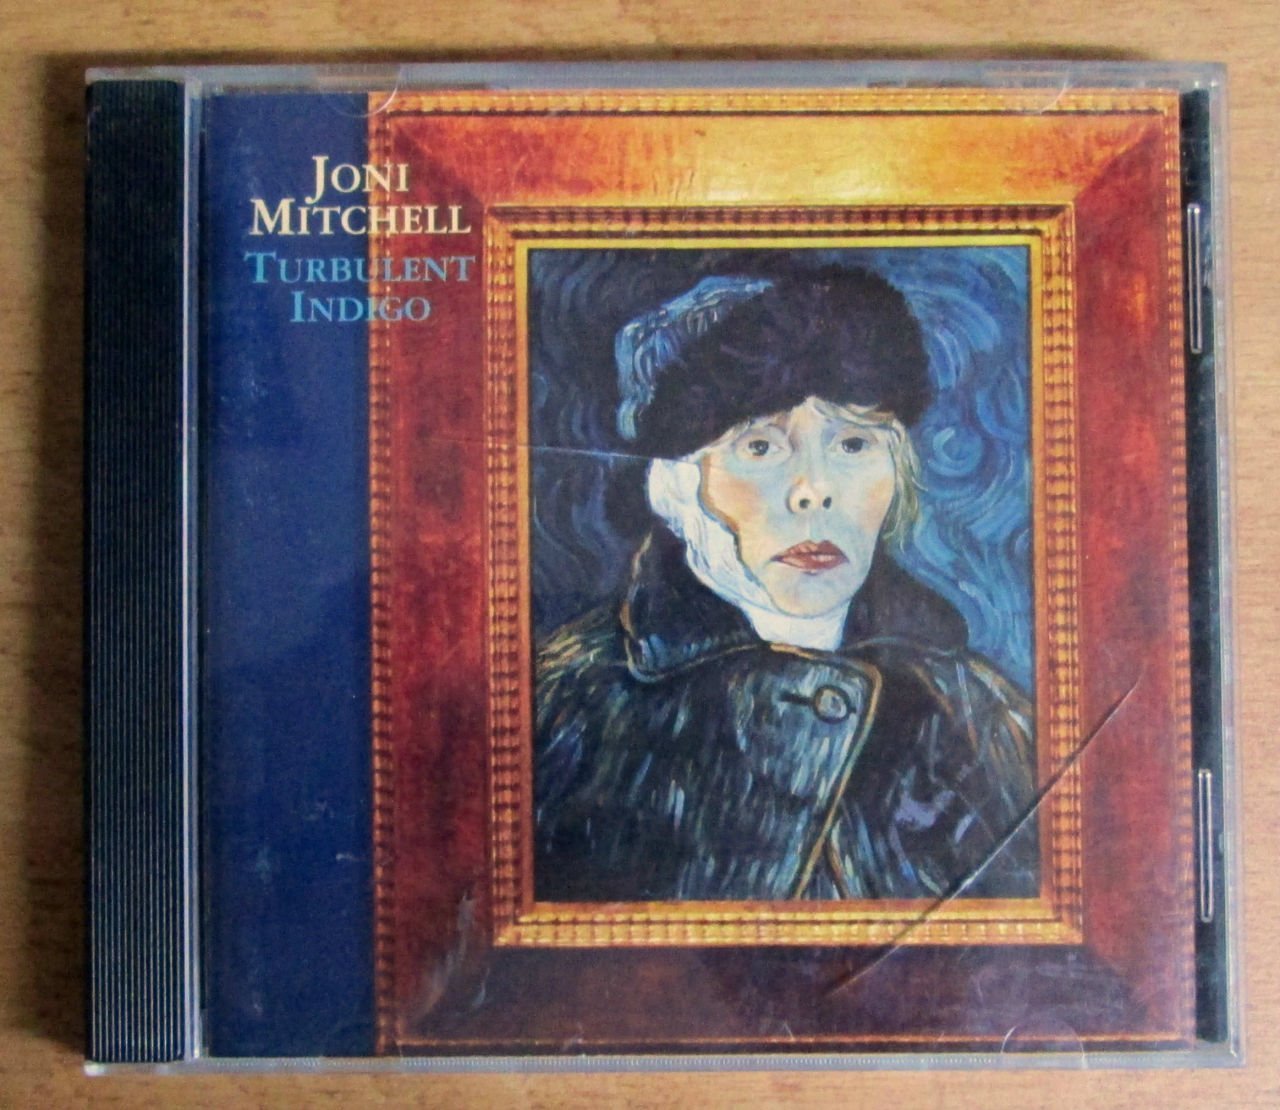 JONI MITCHELL - TURBULENT INDIGO (1994) - CD 2.EL